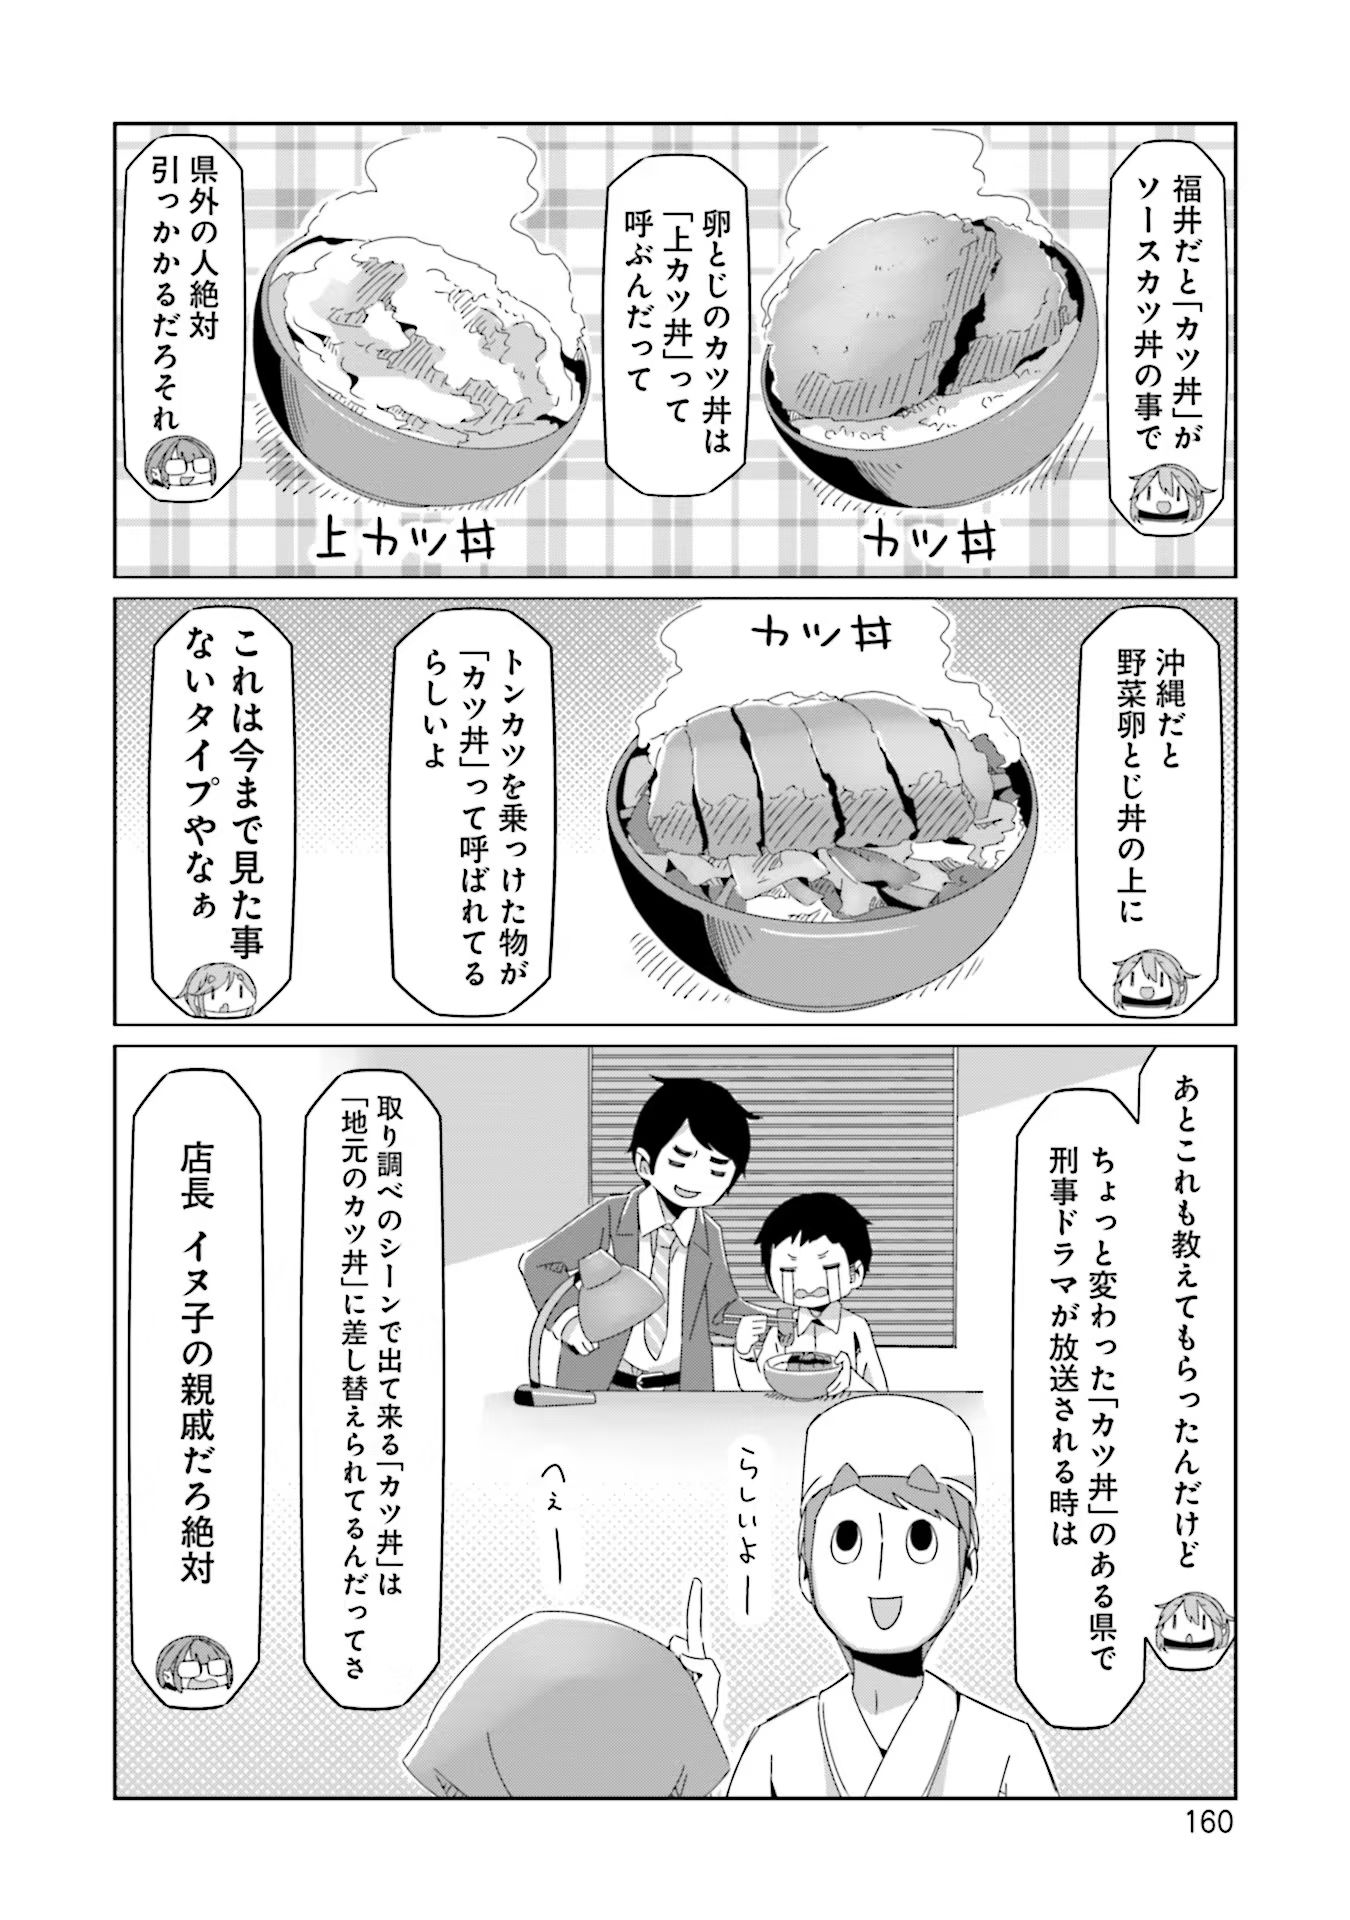 Yuru Camp - Chapter 75.5 - Page 2